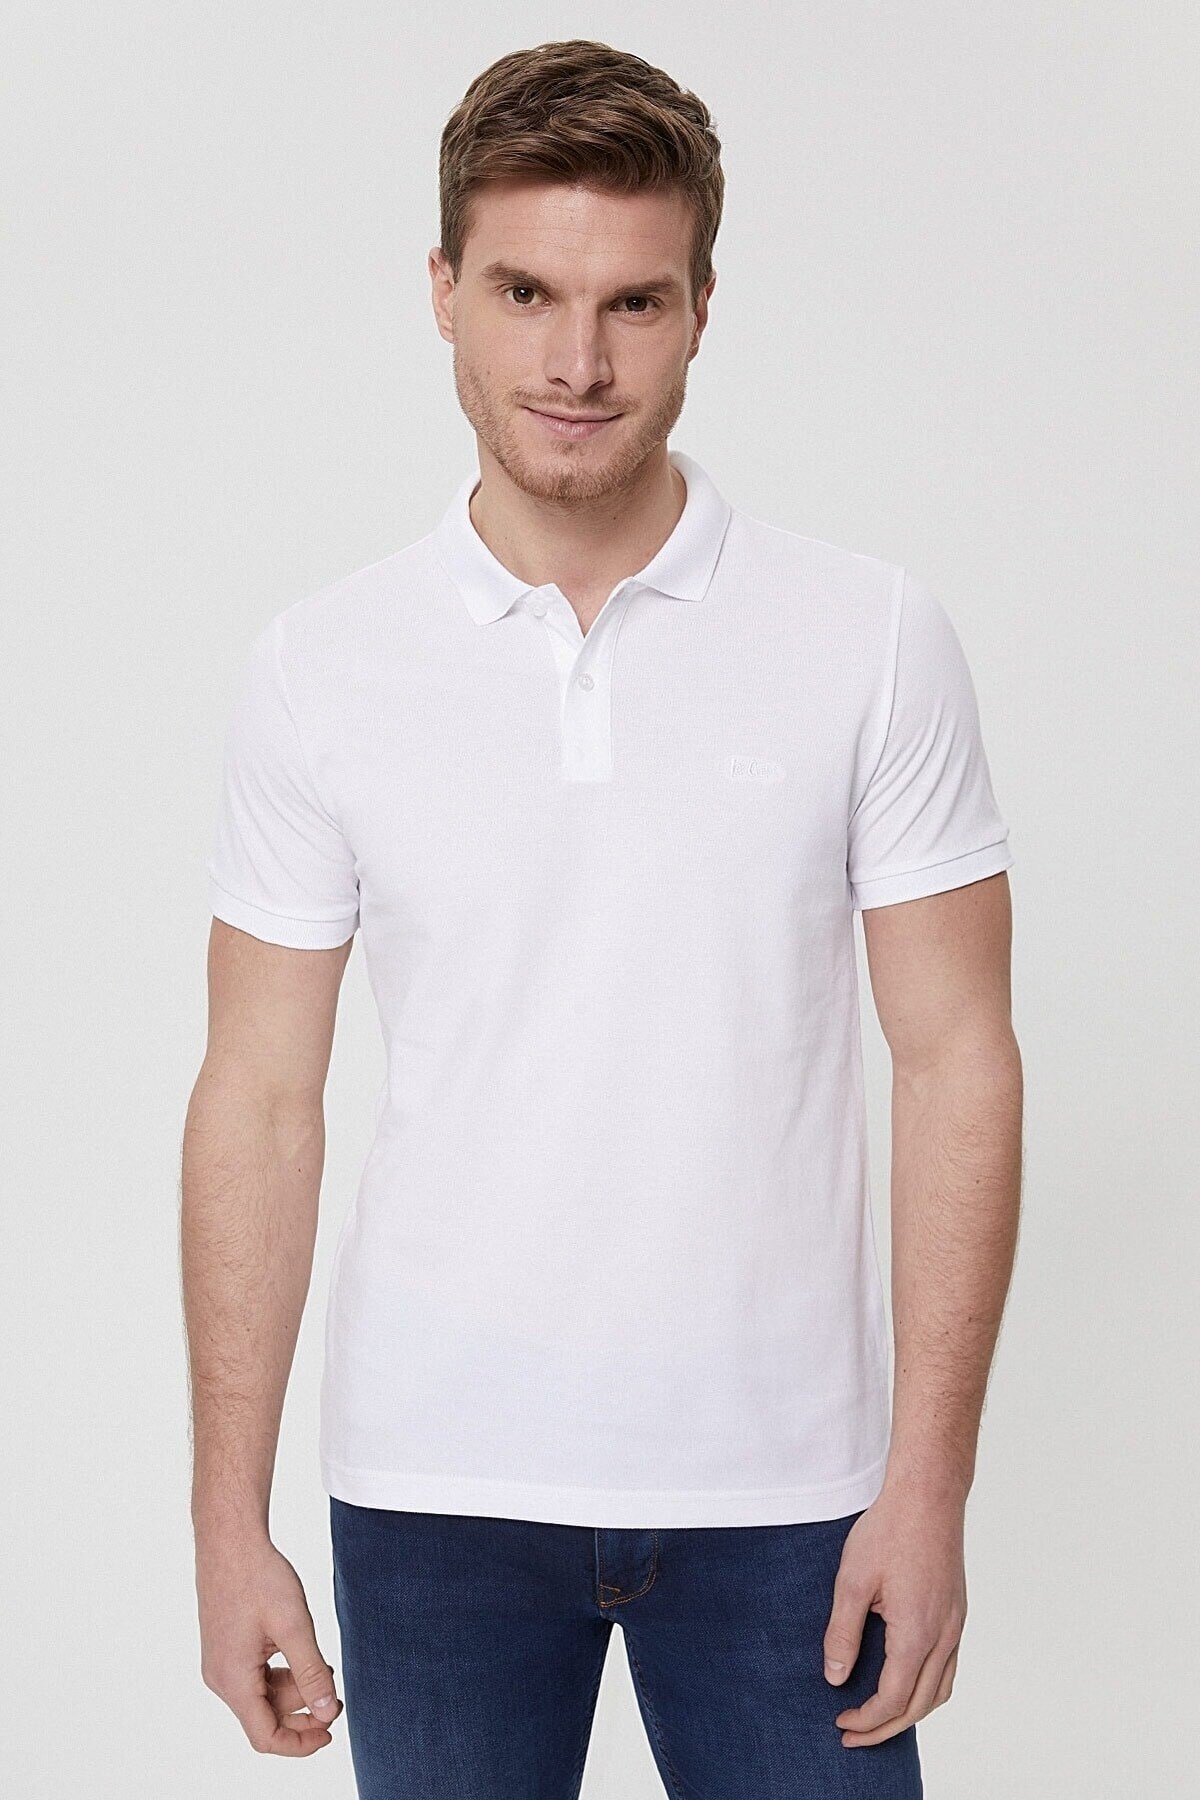 Lee Cooper Erkek T-Shirt 222 LCM 242057 Beyaz